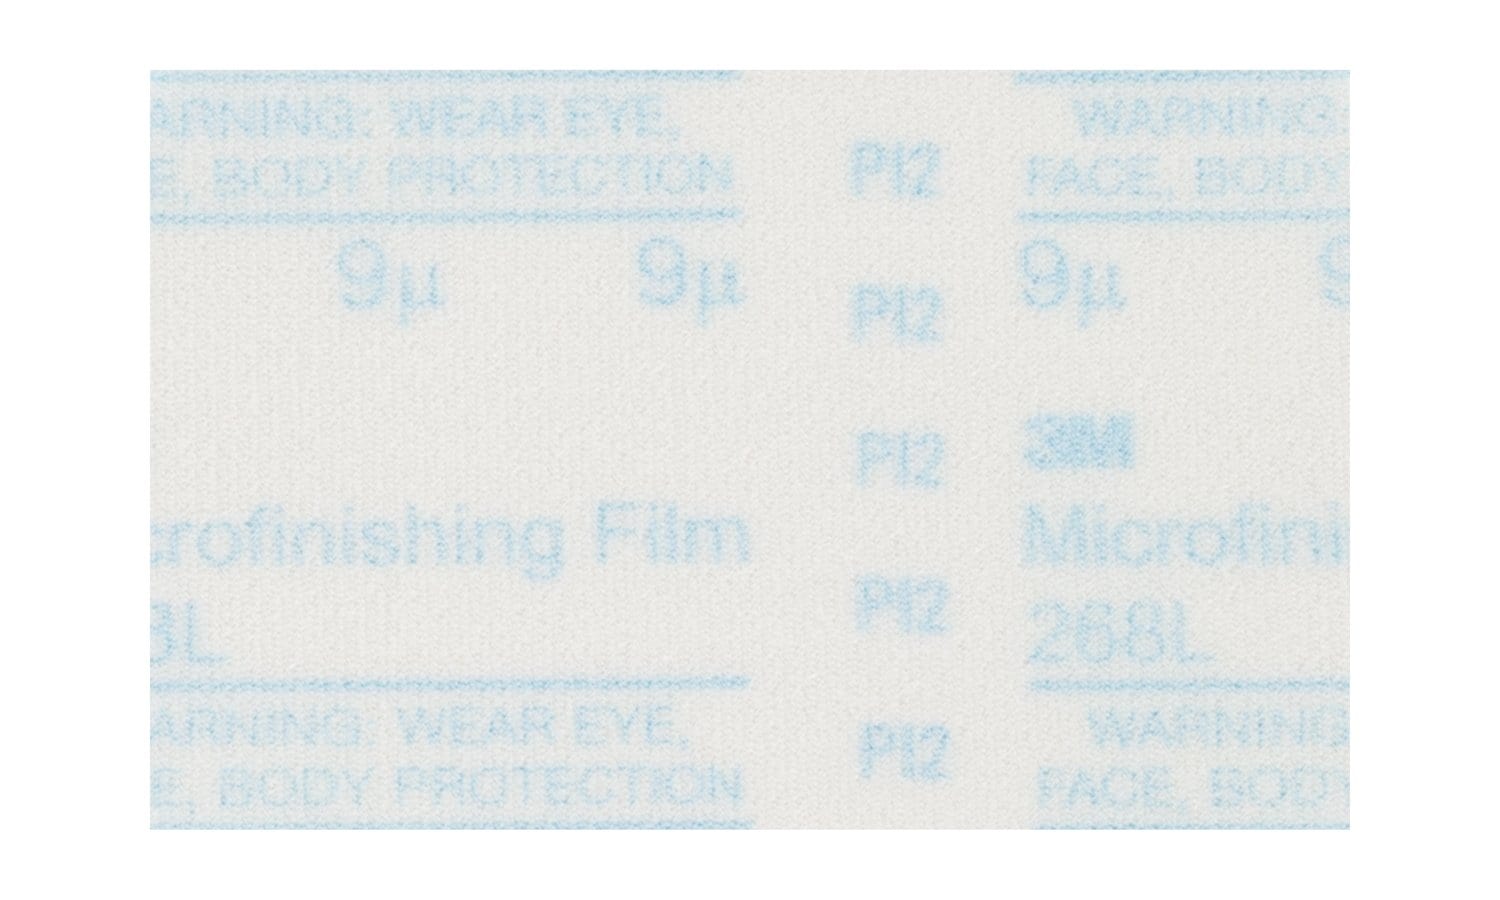 7100014757 - 3M Microfinishing PSA Film Sheet 268L, 15 Mic, Type D, Config